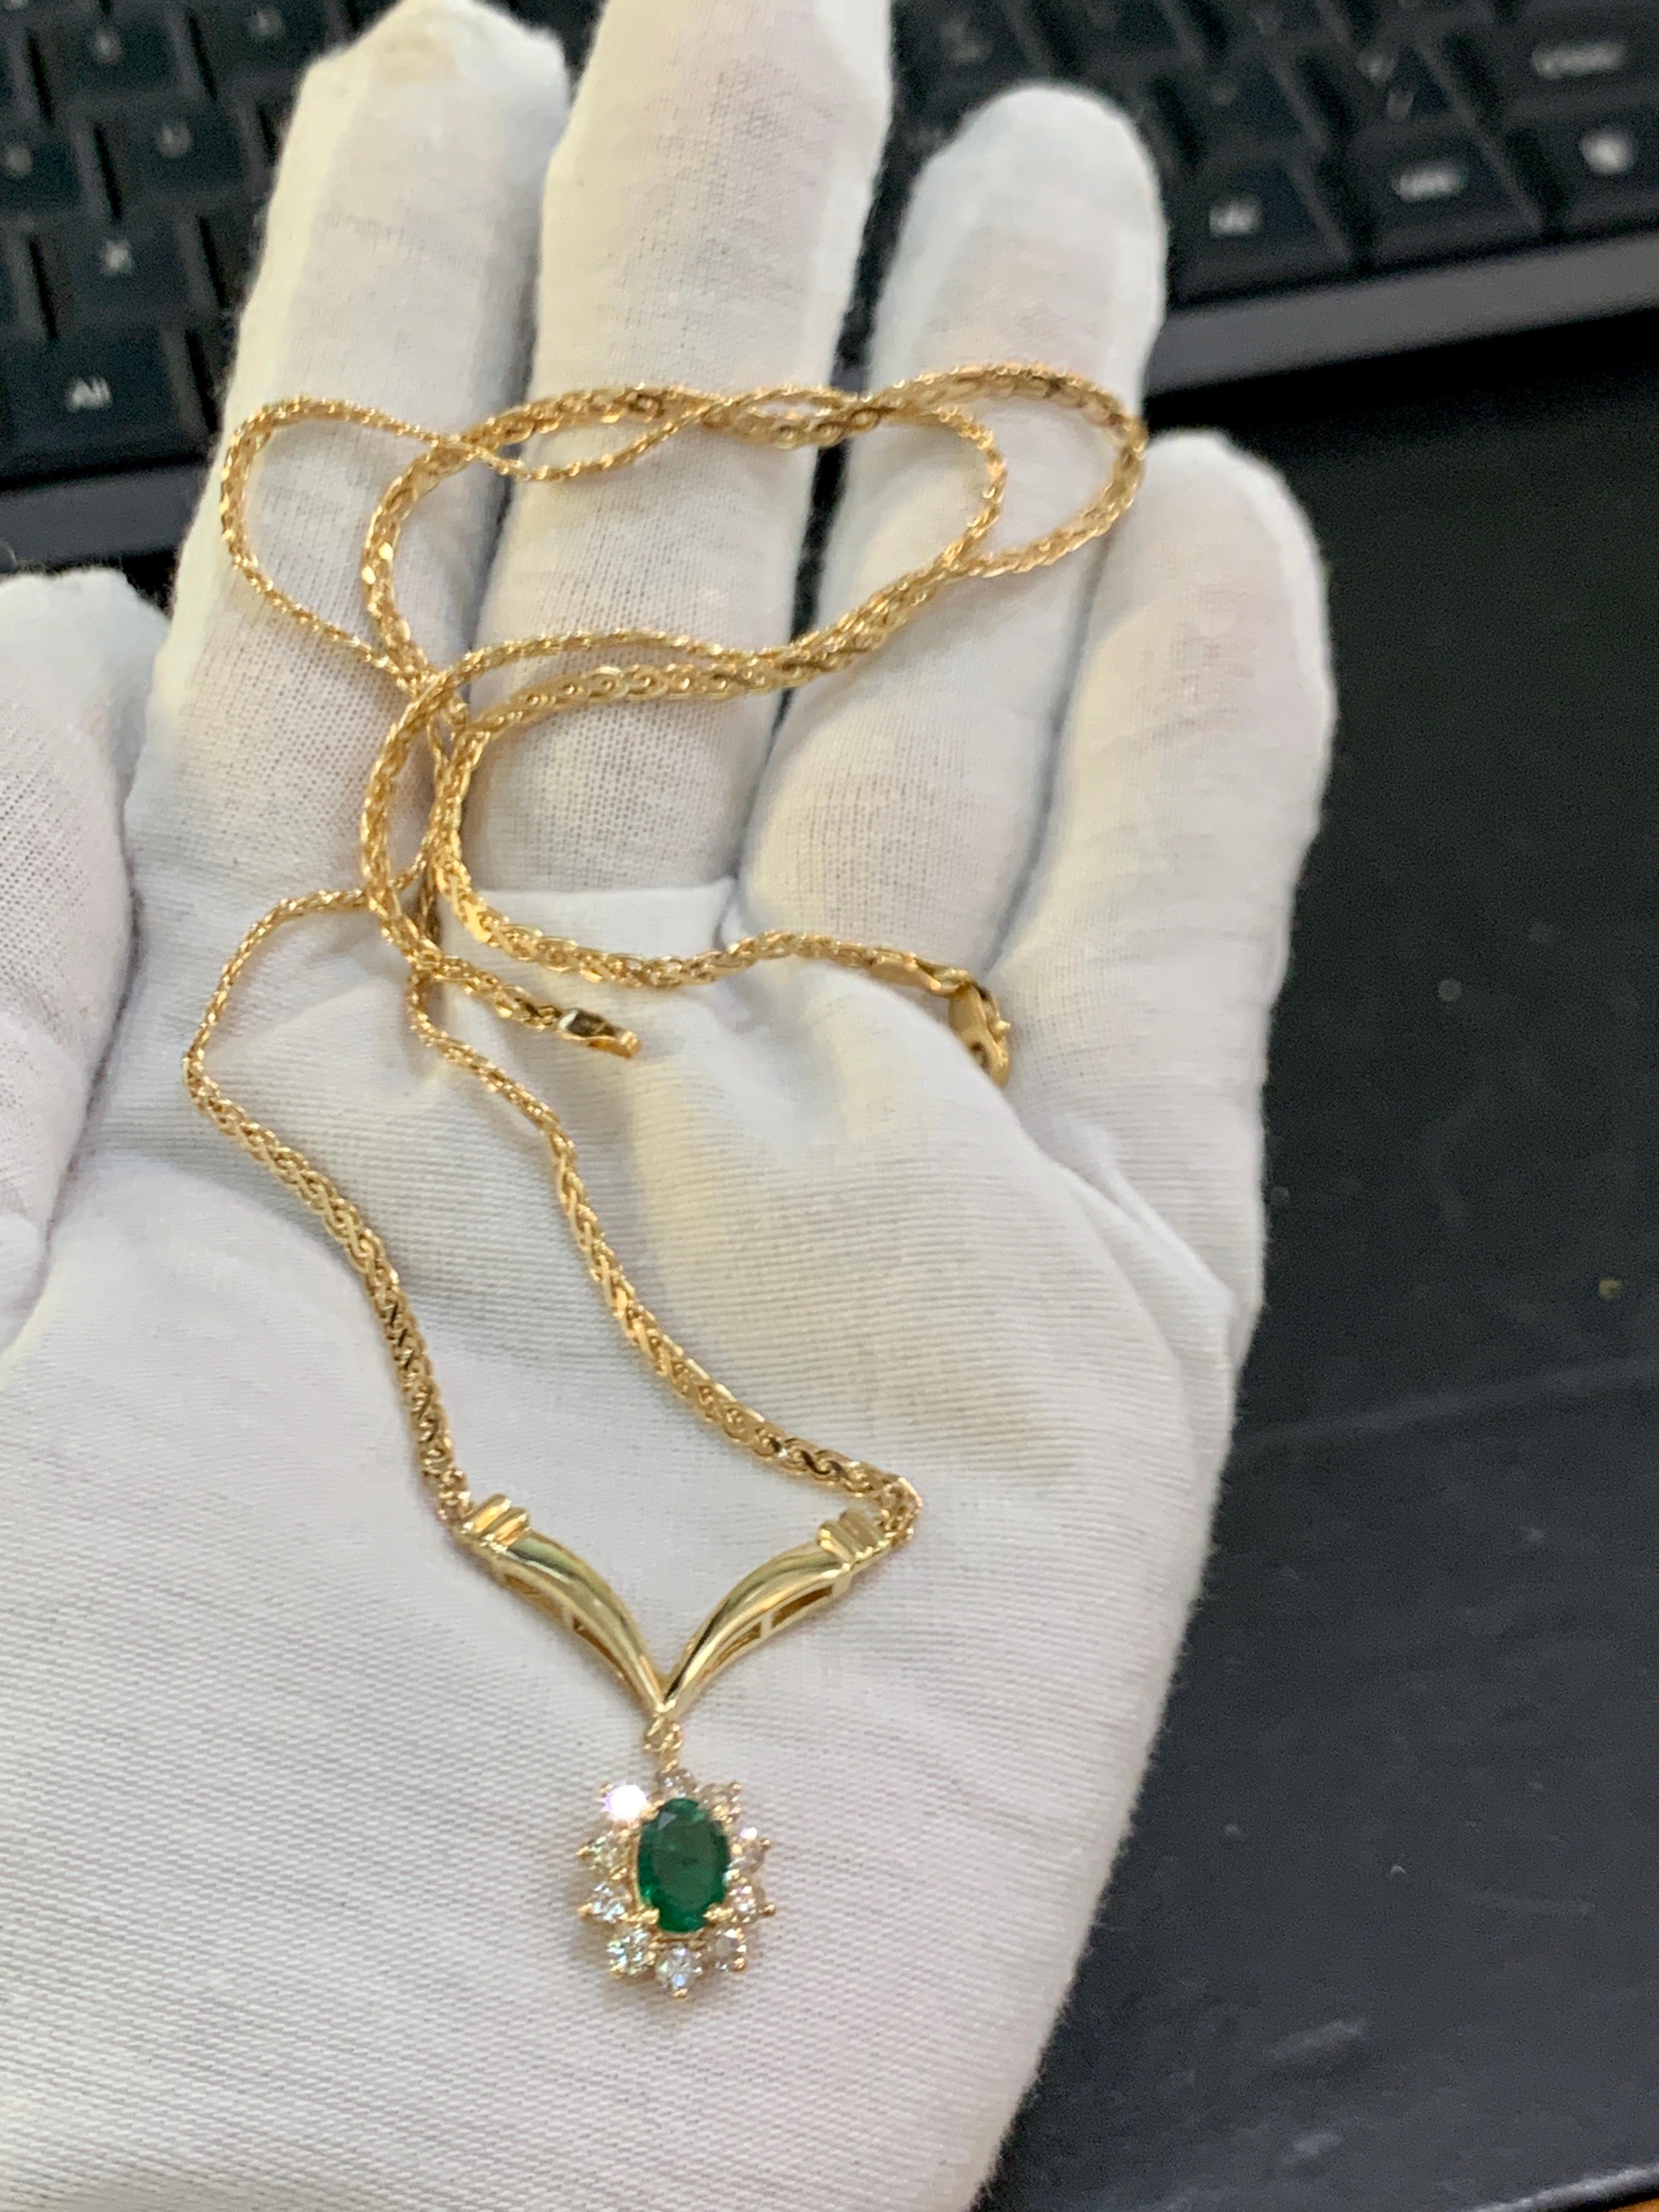 1.2 Carat Oval Shape Emerald & .5 Carat Diamond Necklace in 14 Karat Yellow Gold 2